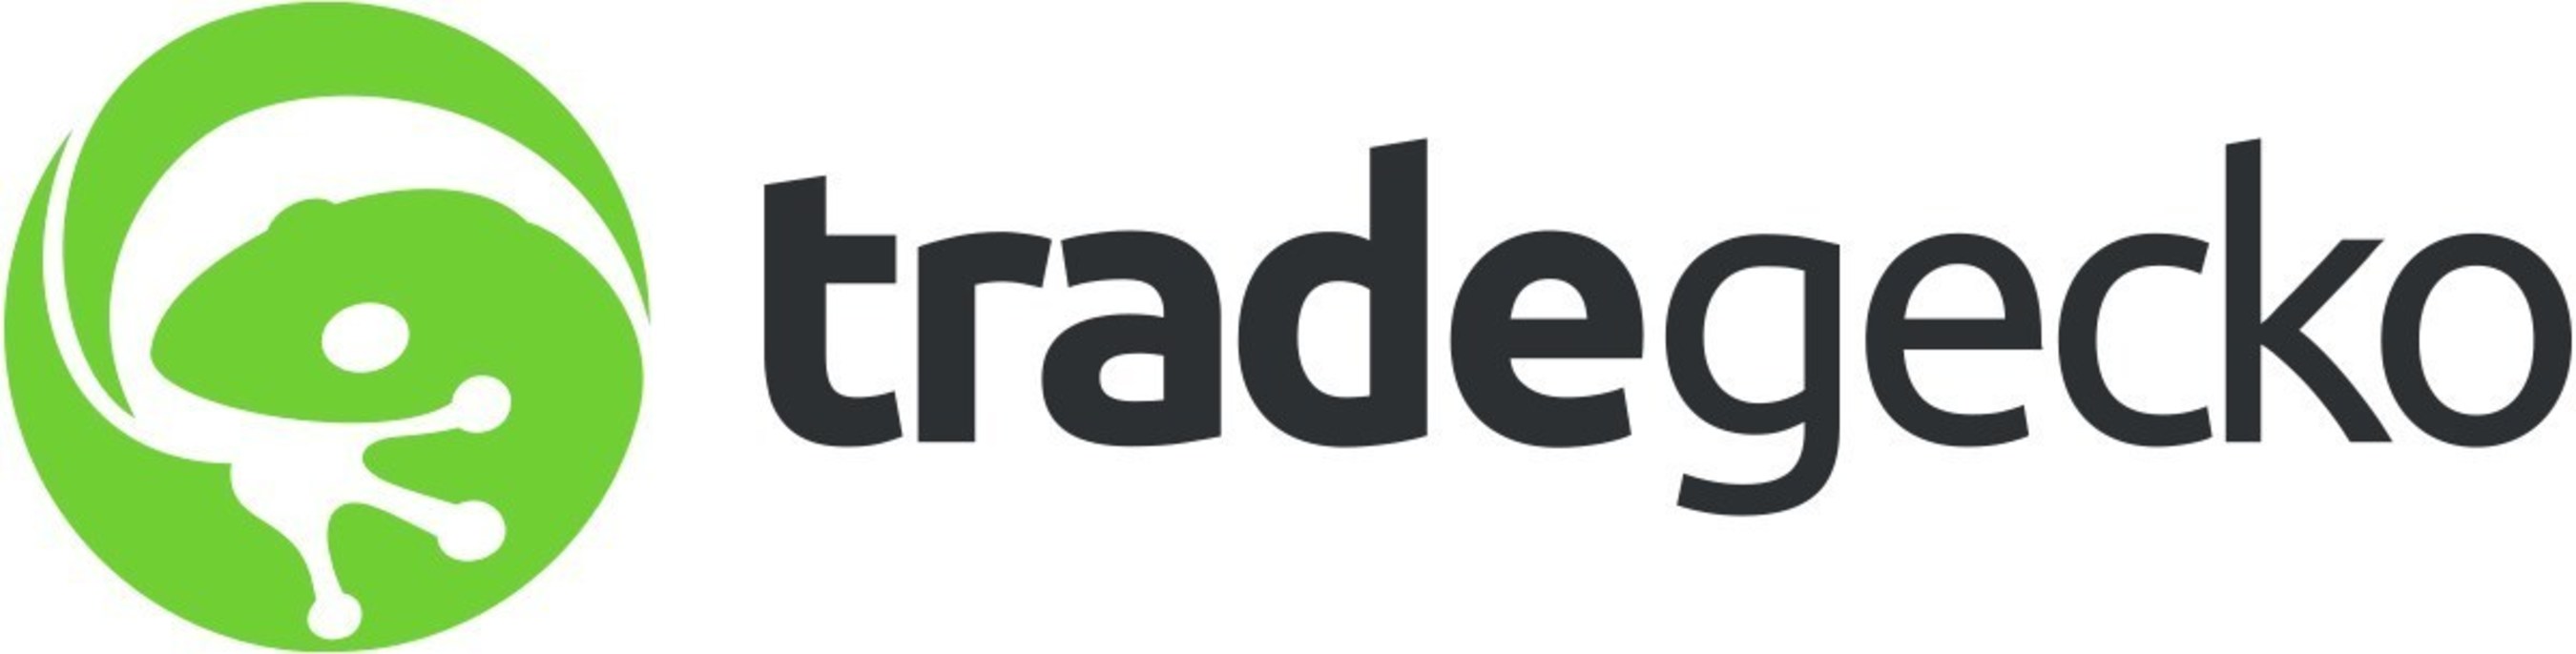 TradeGecko Unveils Major Updates to Its Supply Chain Management Platform